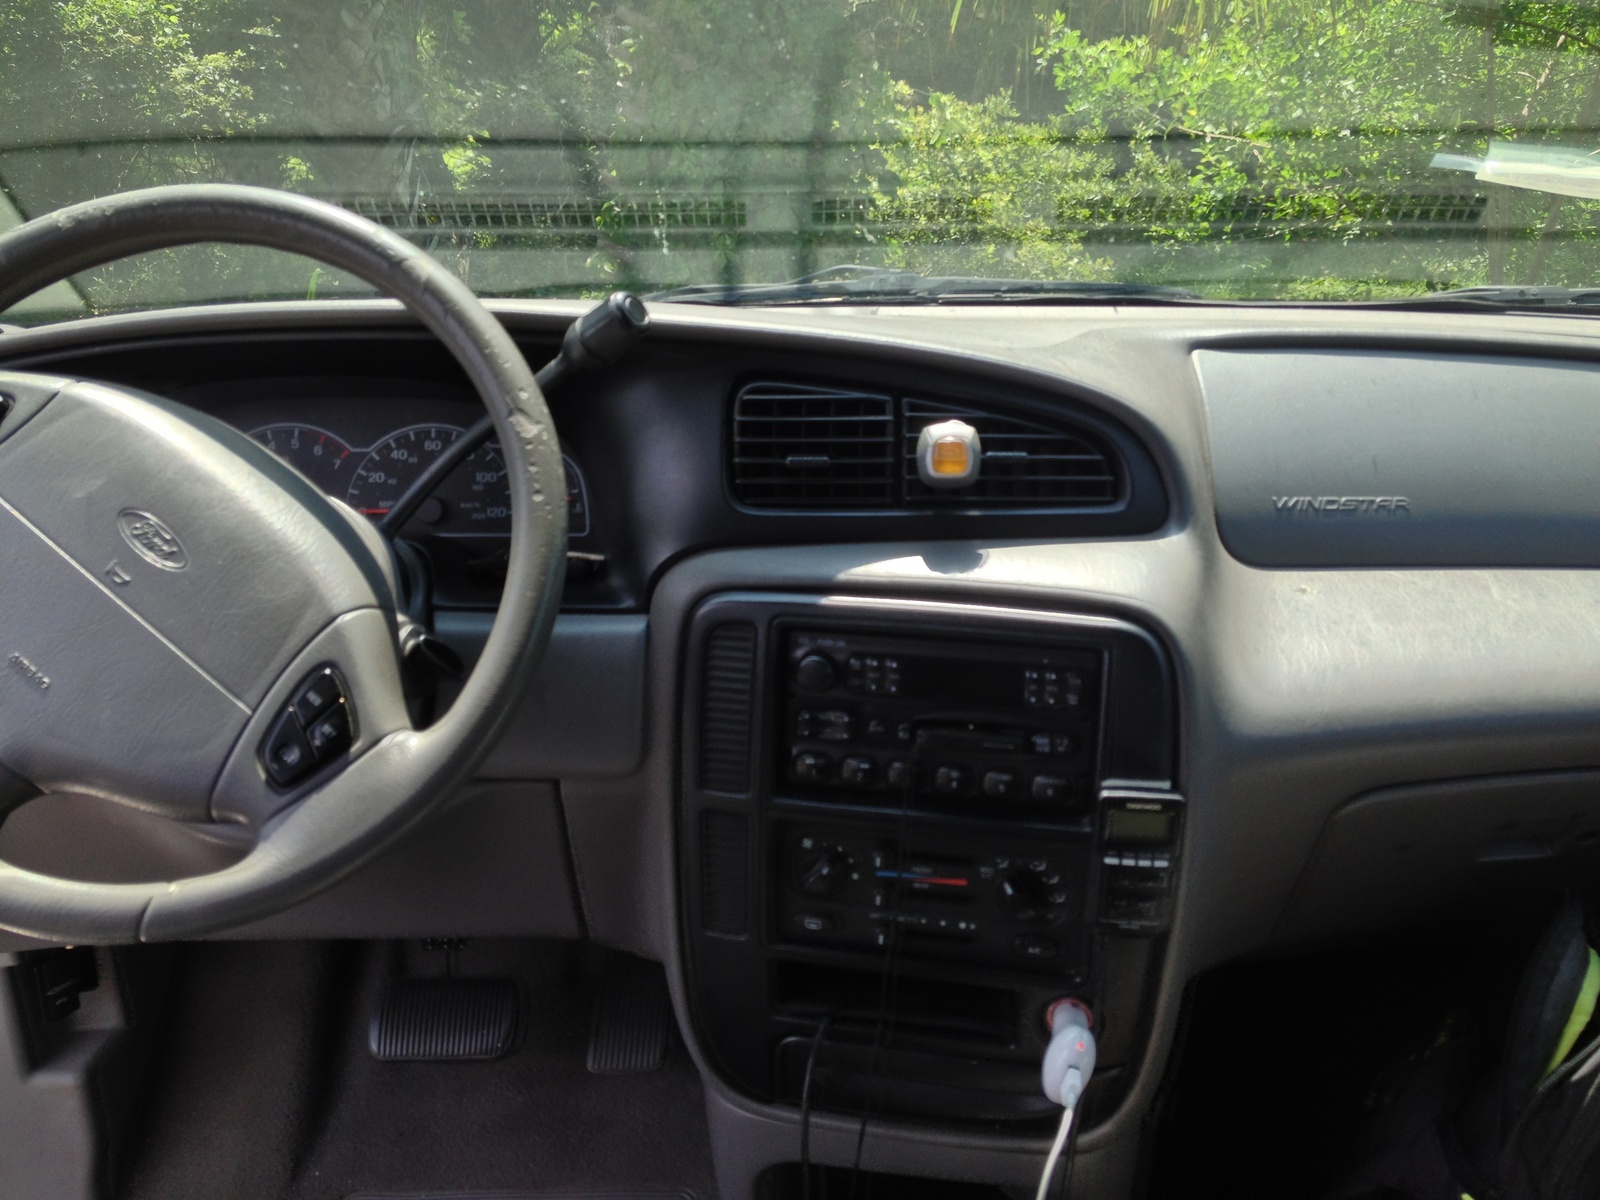 2000 Ford windstar interior dimensions #2